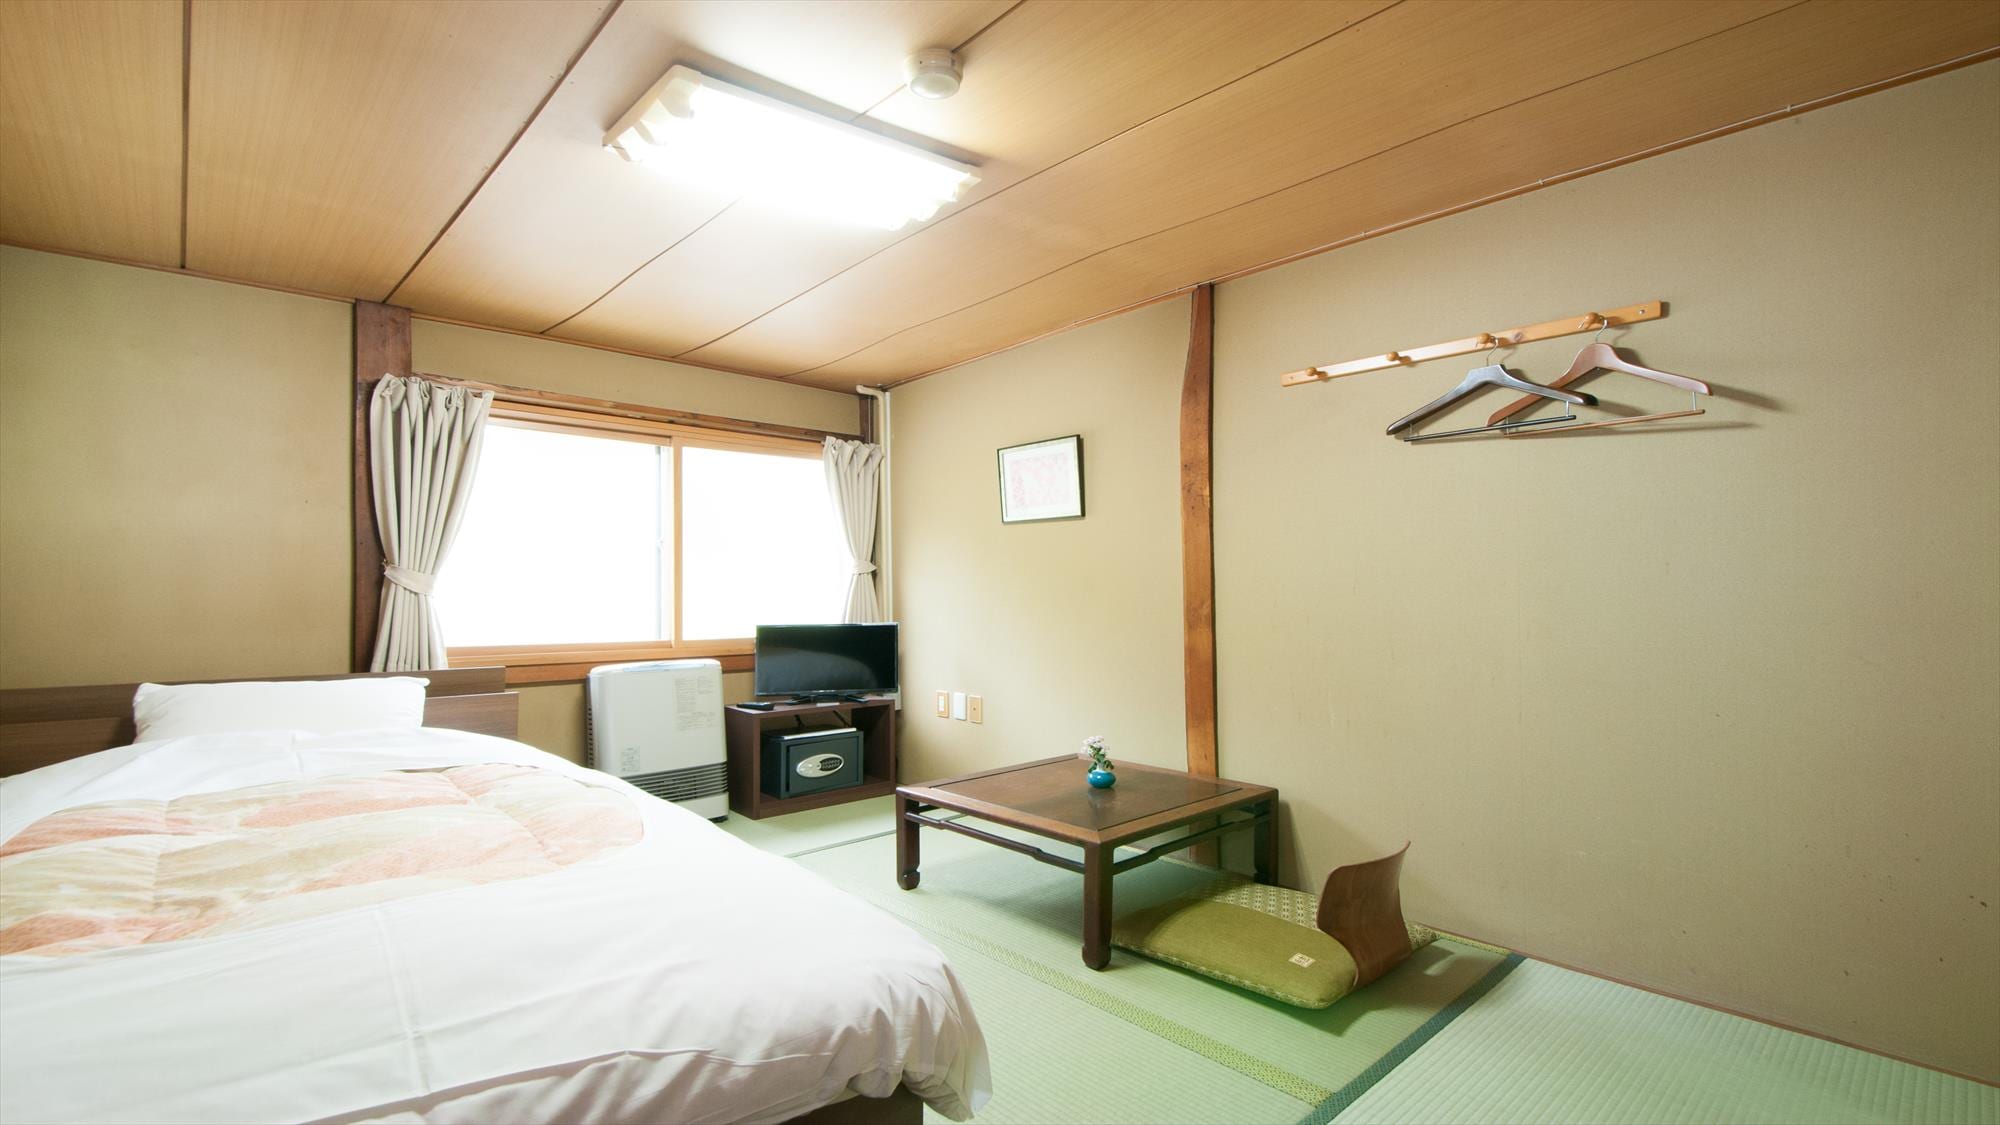 ◆ [Main Building] Japanese-style room 6 tatami mats